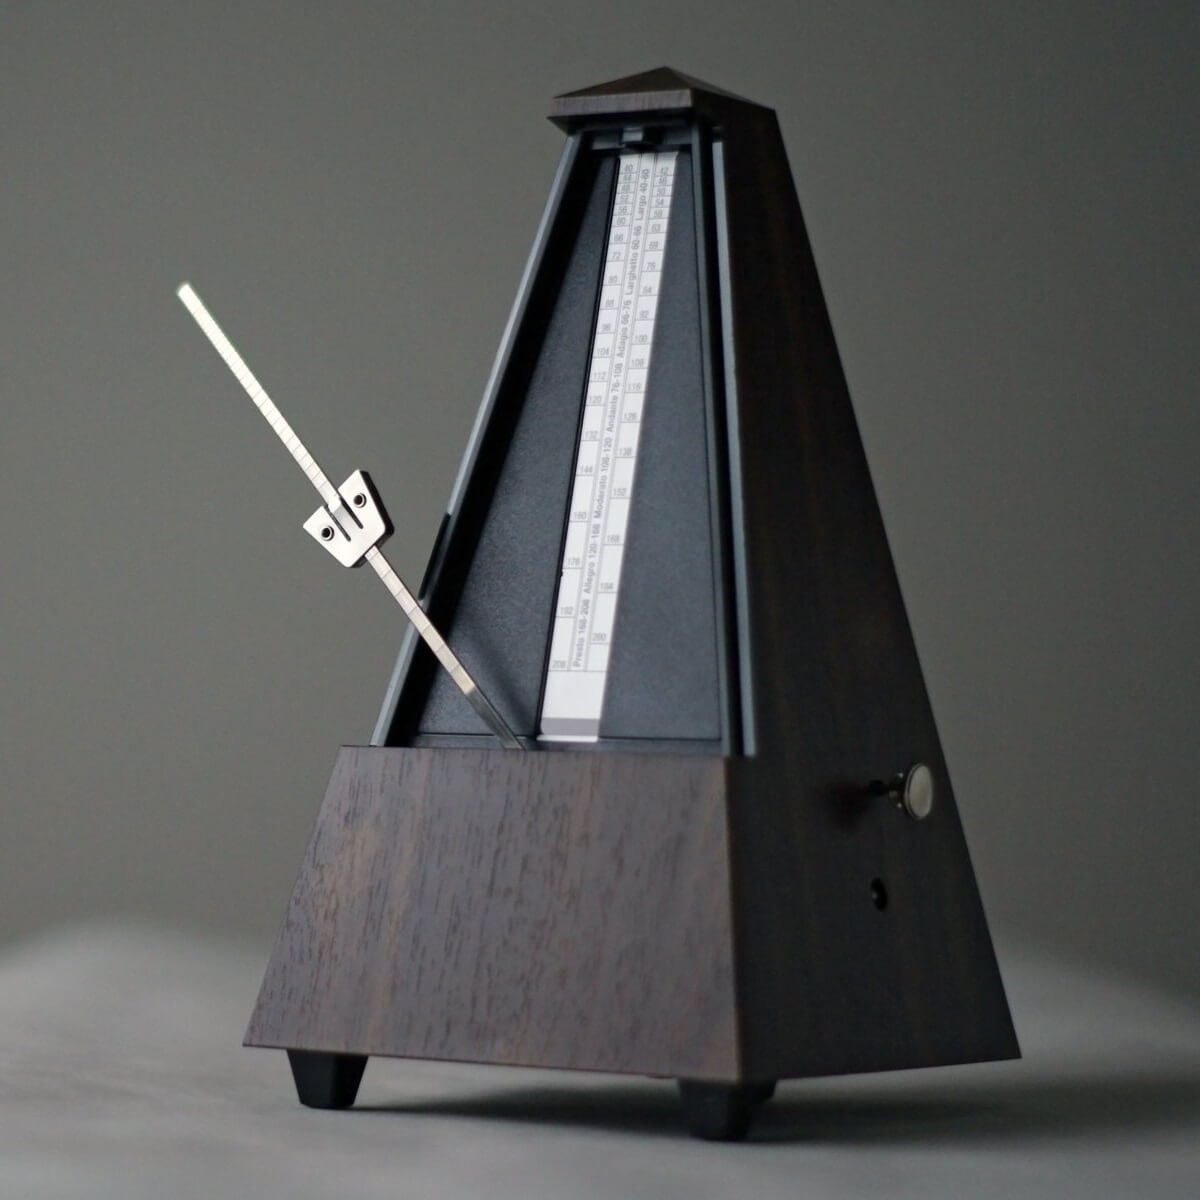 Metronome for piano